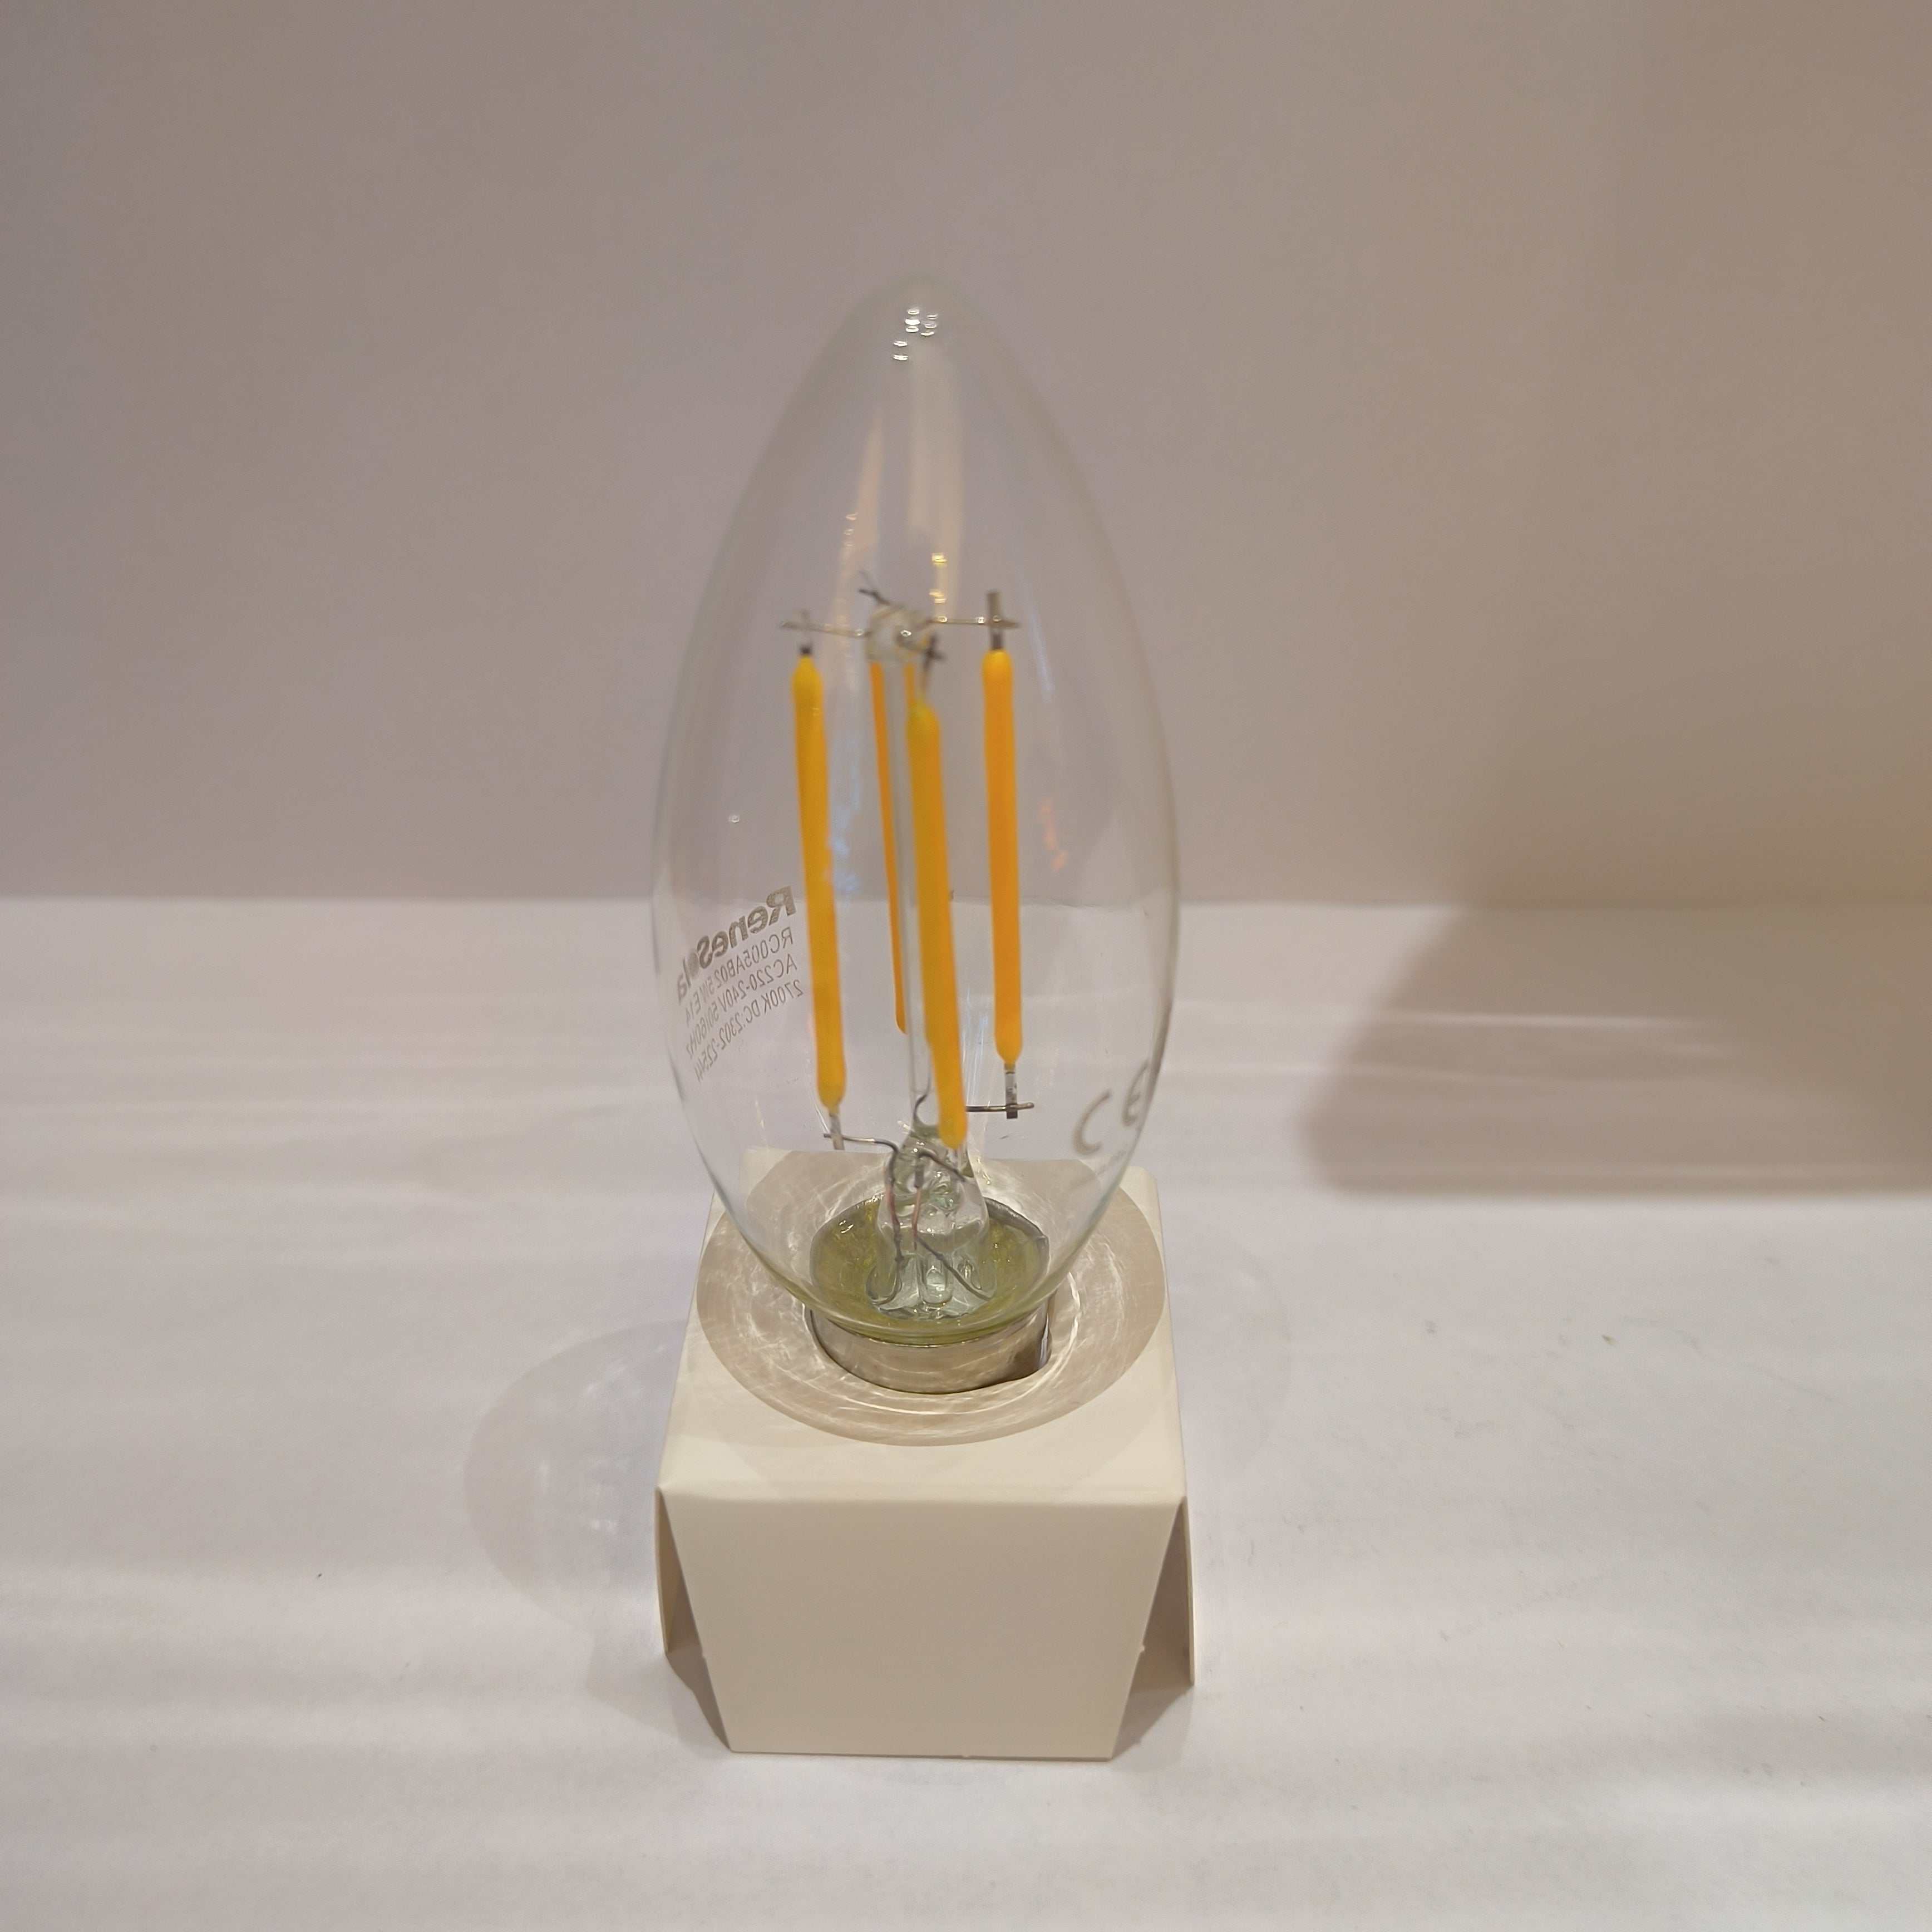 Renesola 5W LED E-14 Candel Bulb Best Price for Brilliant Illumination and Elegant Design